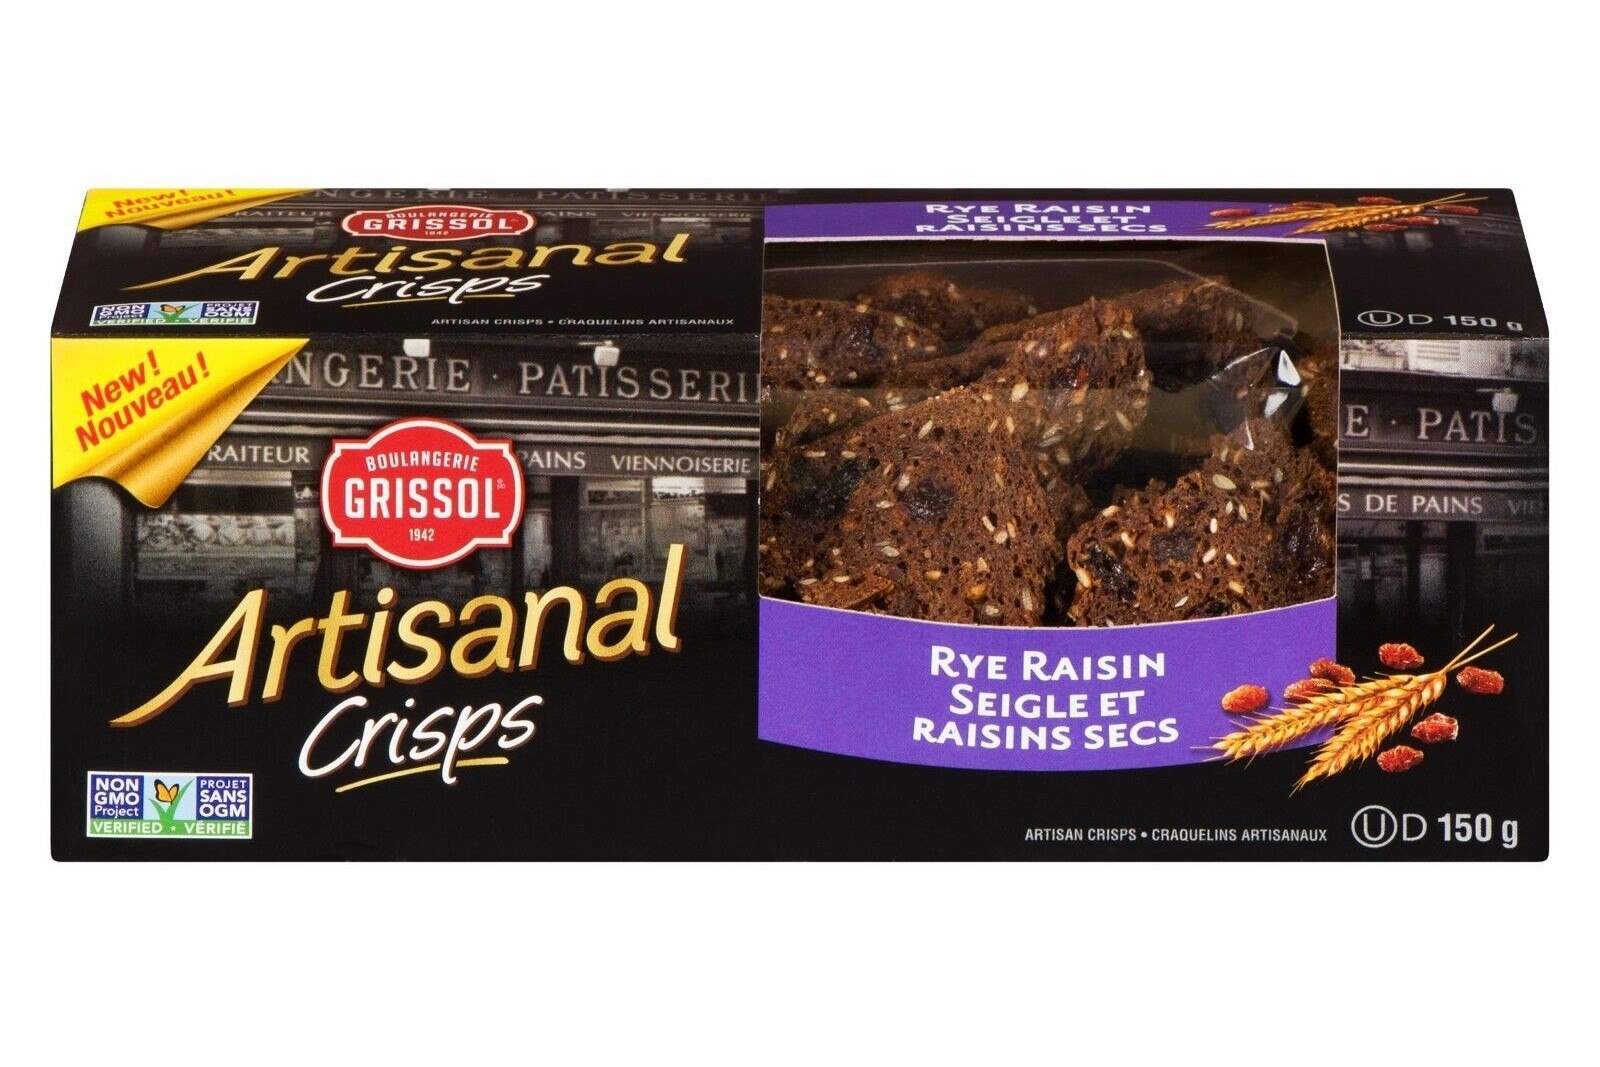 11-boulangerie-grissol-artisanal-crisps-rye-and-raisins-nutrition-facts